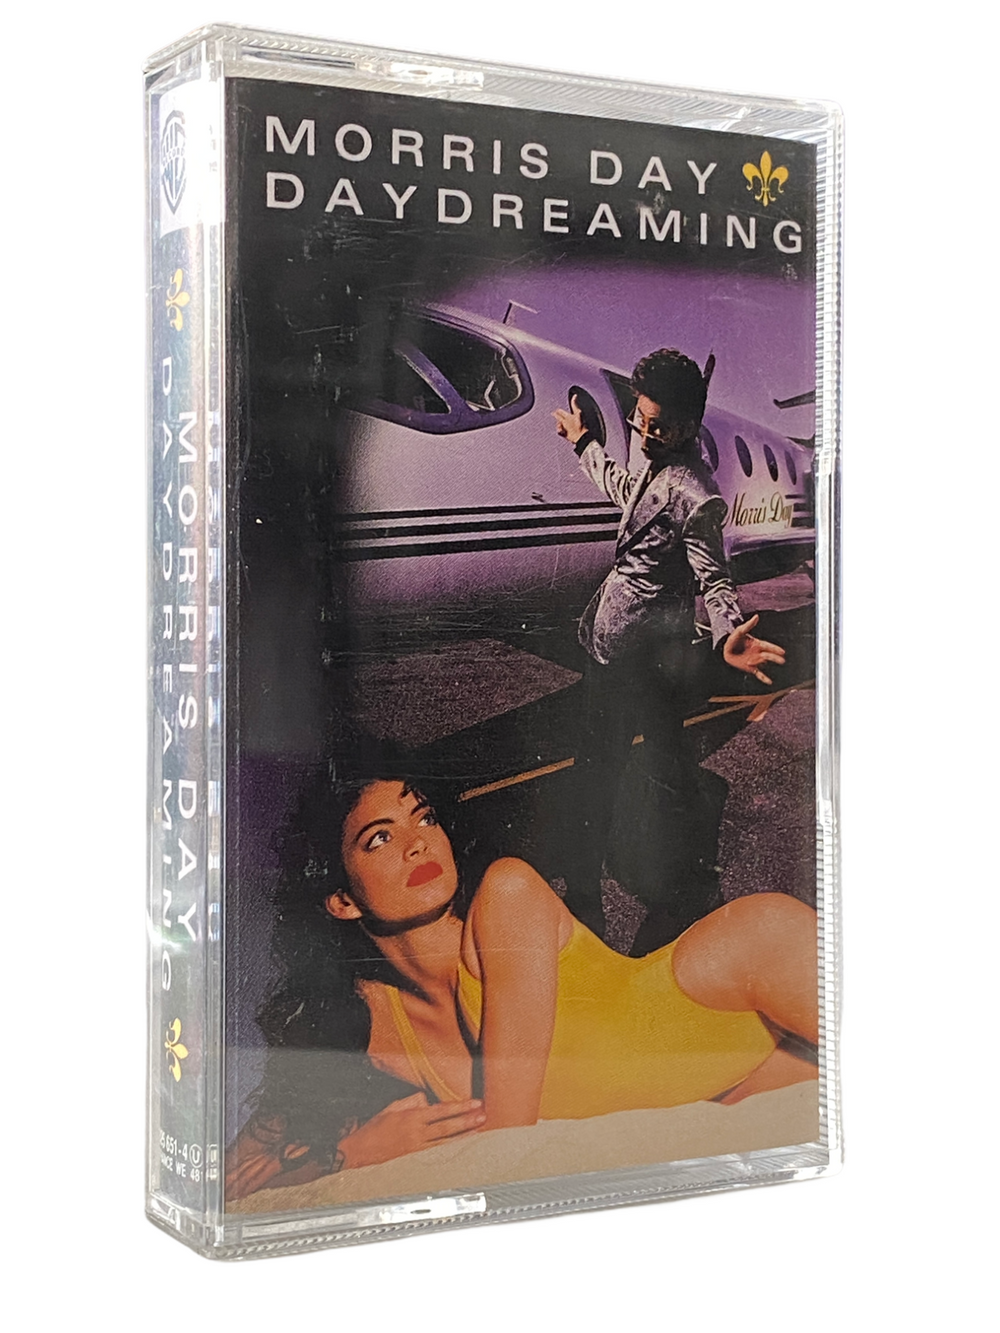 Prince – Morris Day Daydreaming Original Cassette Tape EU 1987 Release Prince